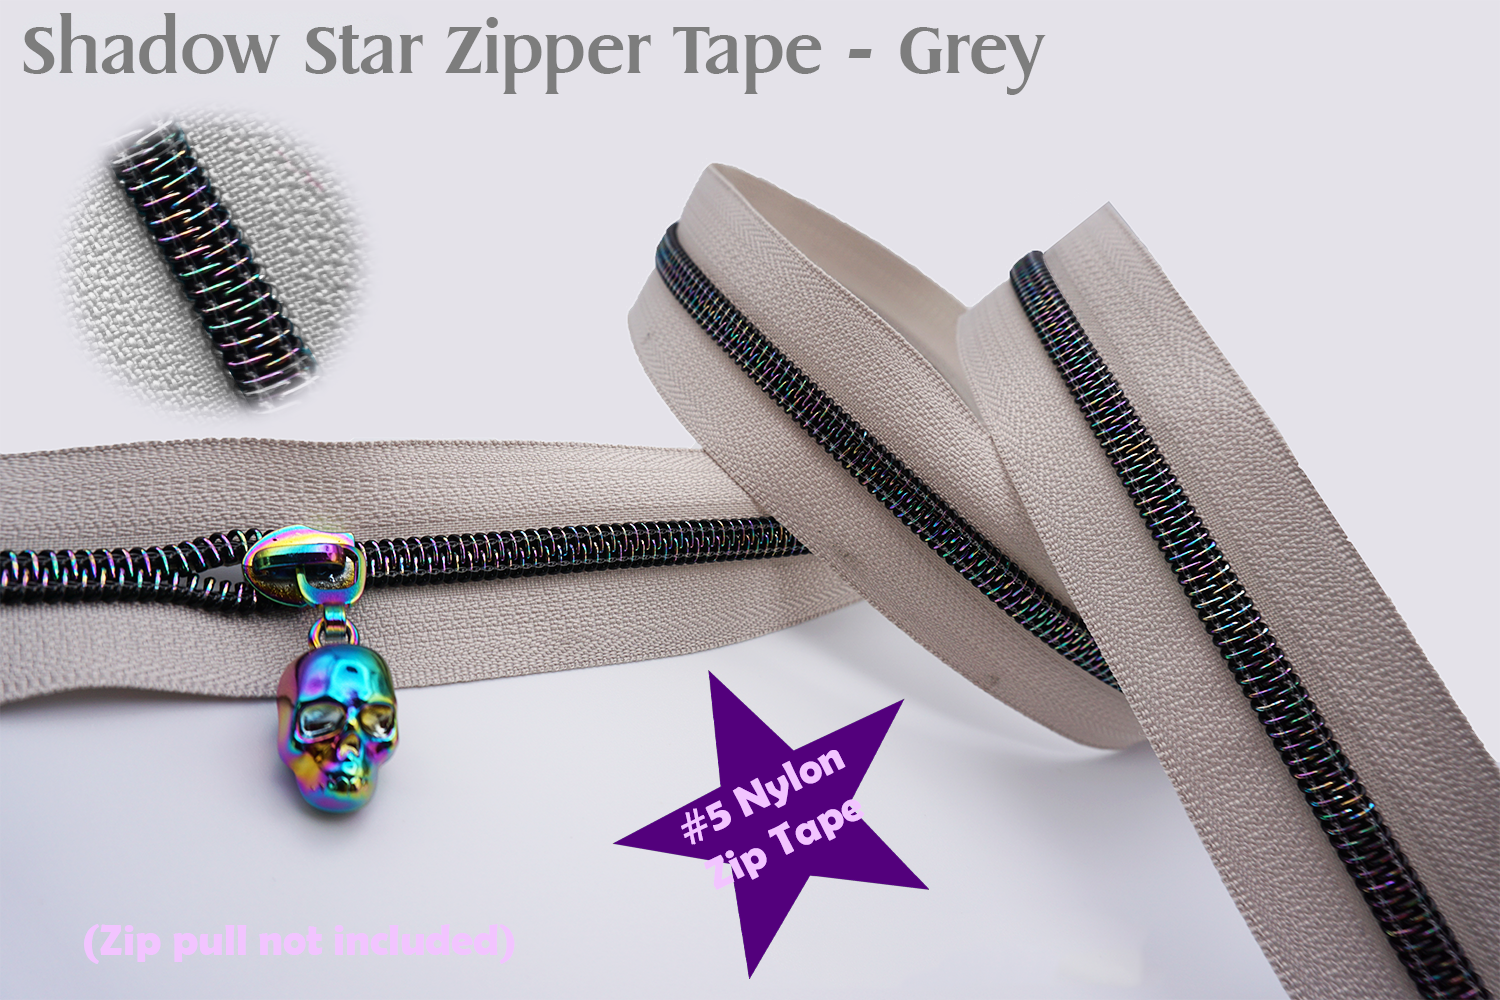 Shadow Star Zipper Tape - GREY, , for #5 nylon zips